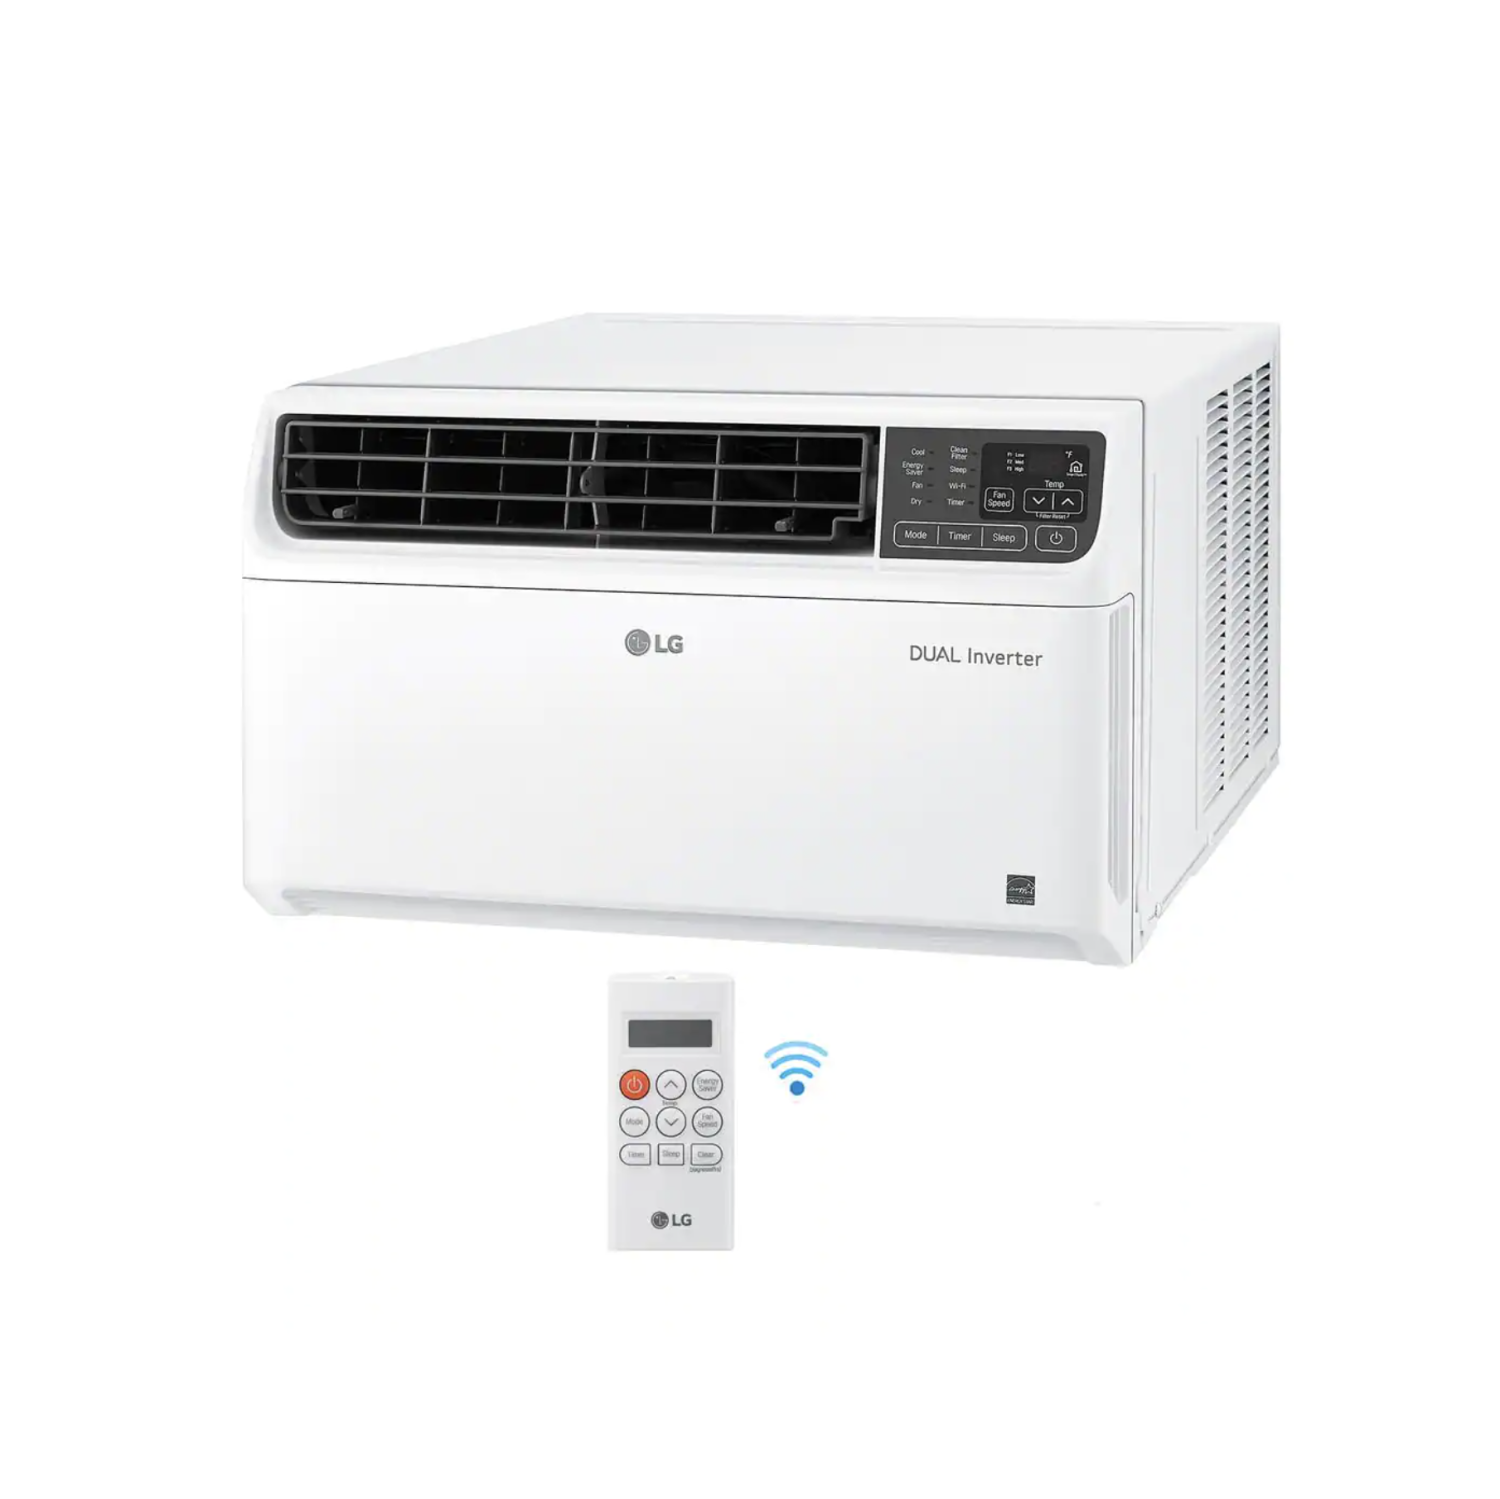 LG 12,000 BTU Dual Inverter Smart (Wi-Fi) Window Air Conditioner, Cools 550 Sq.Ft, Ultra Quiet, 35% Energy Savings, Works w/ LG ThinQ, Alexa, Google & Remote - 115 V (LW1222IVISM)